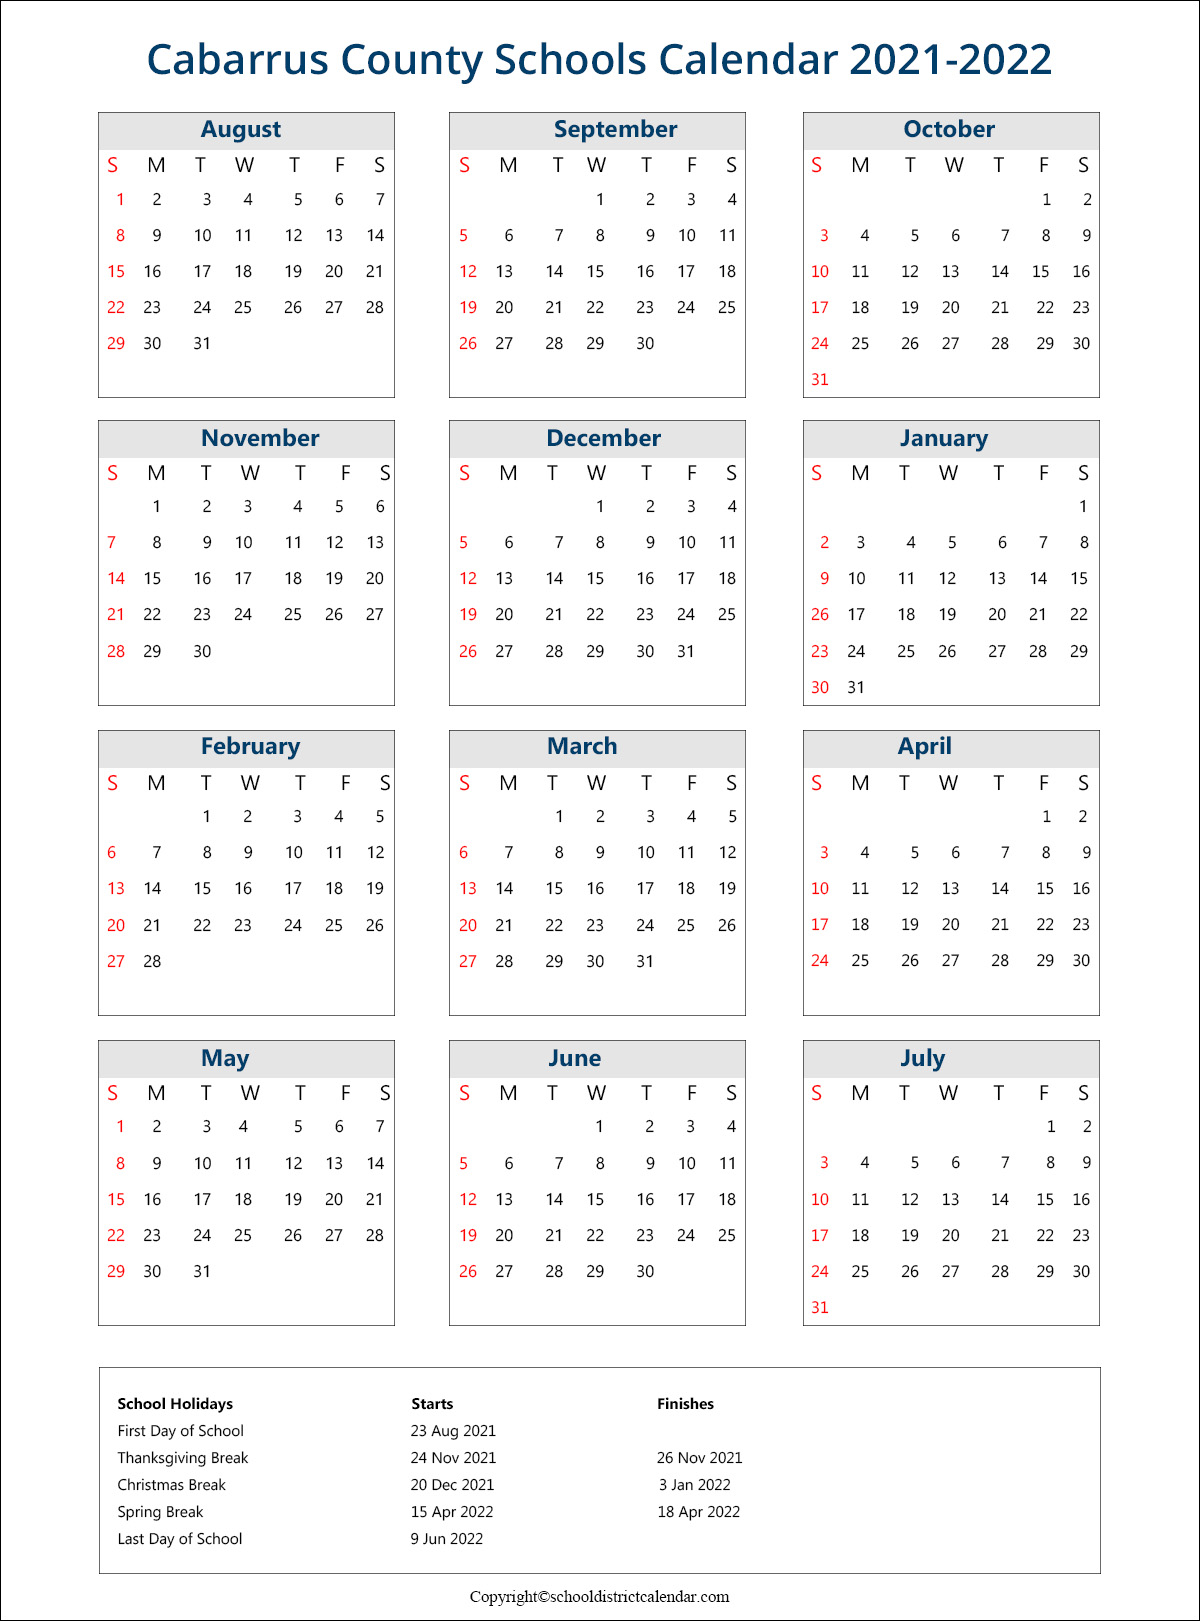 Cabarrus County Schools District, North Carolina Calendar Holidays 2021